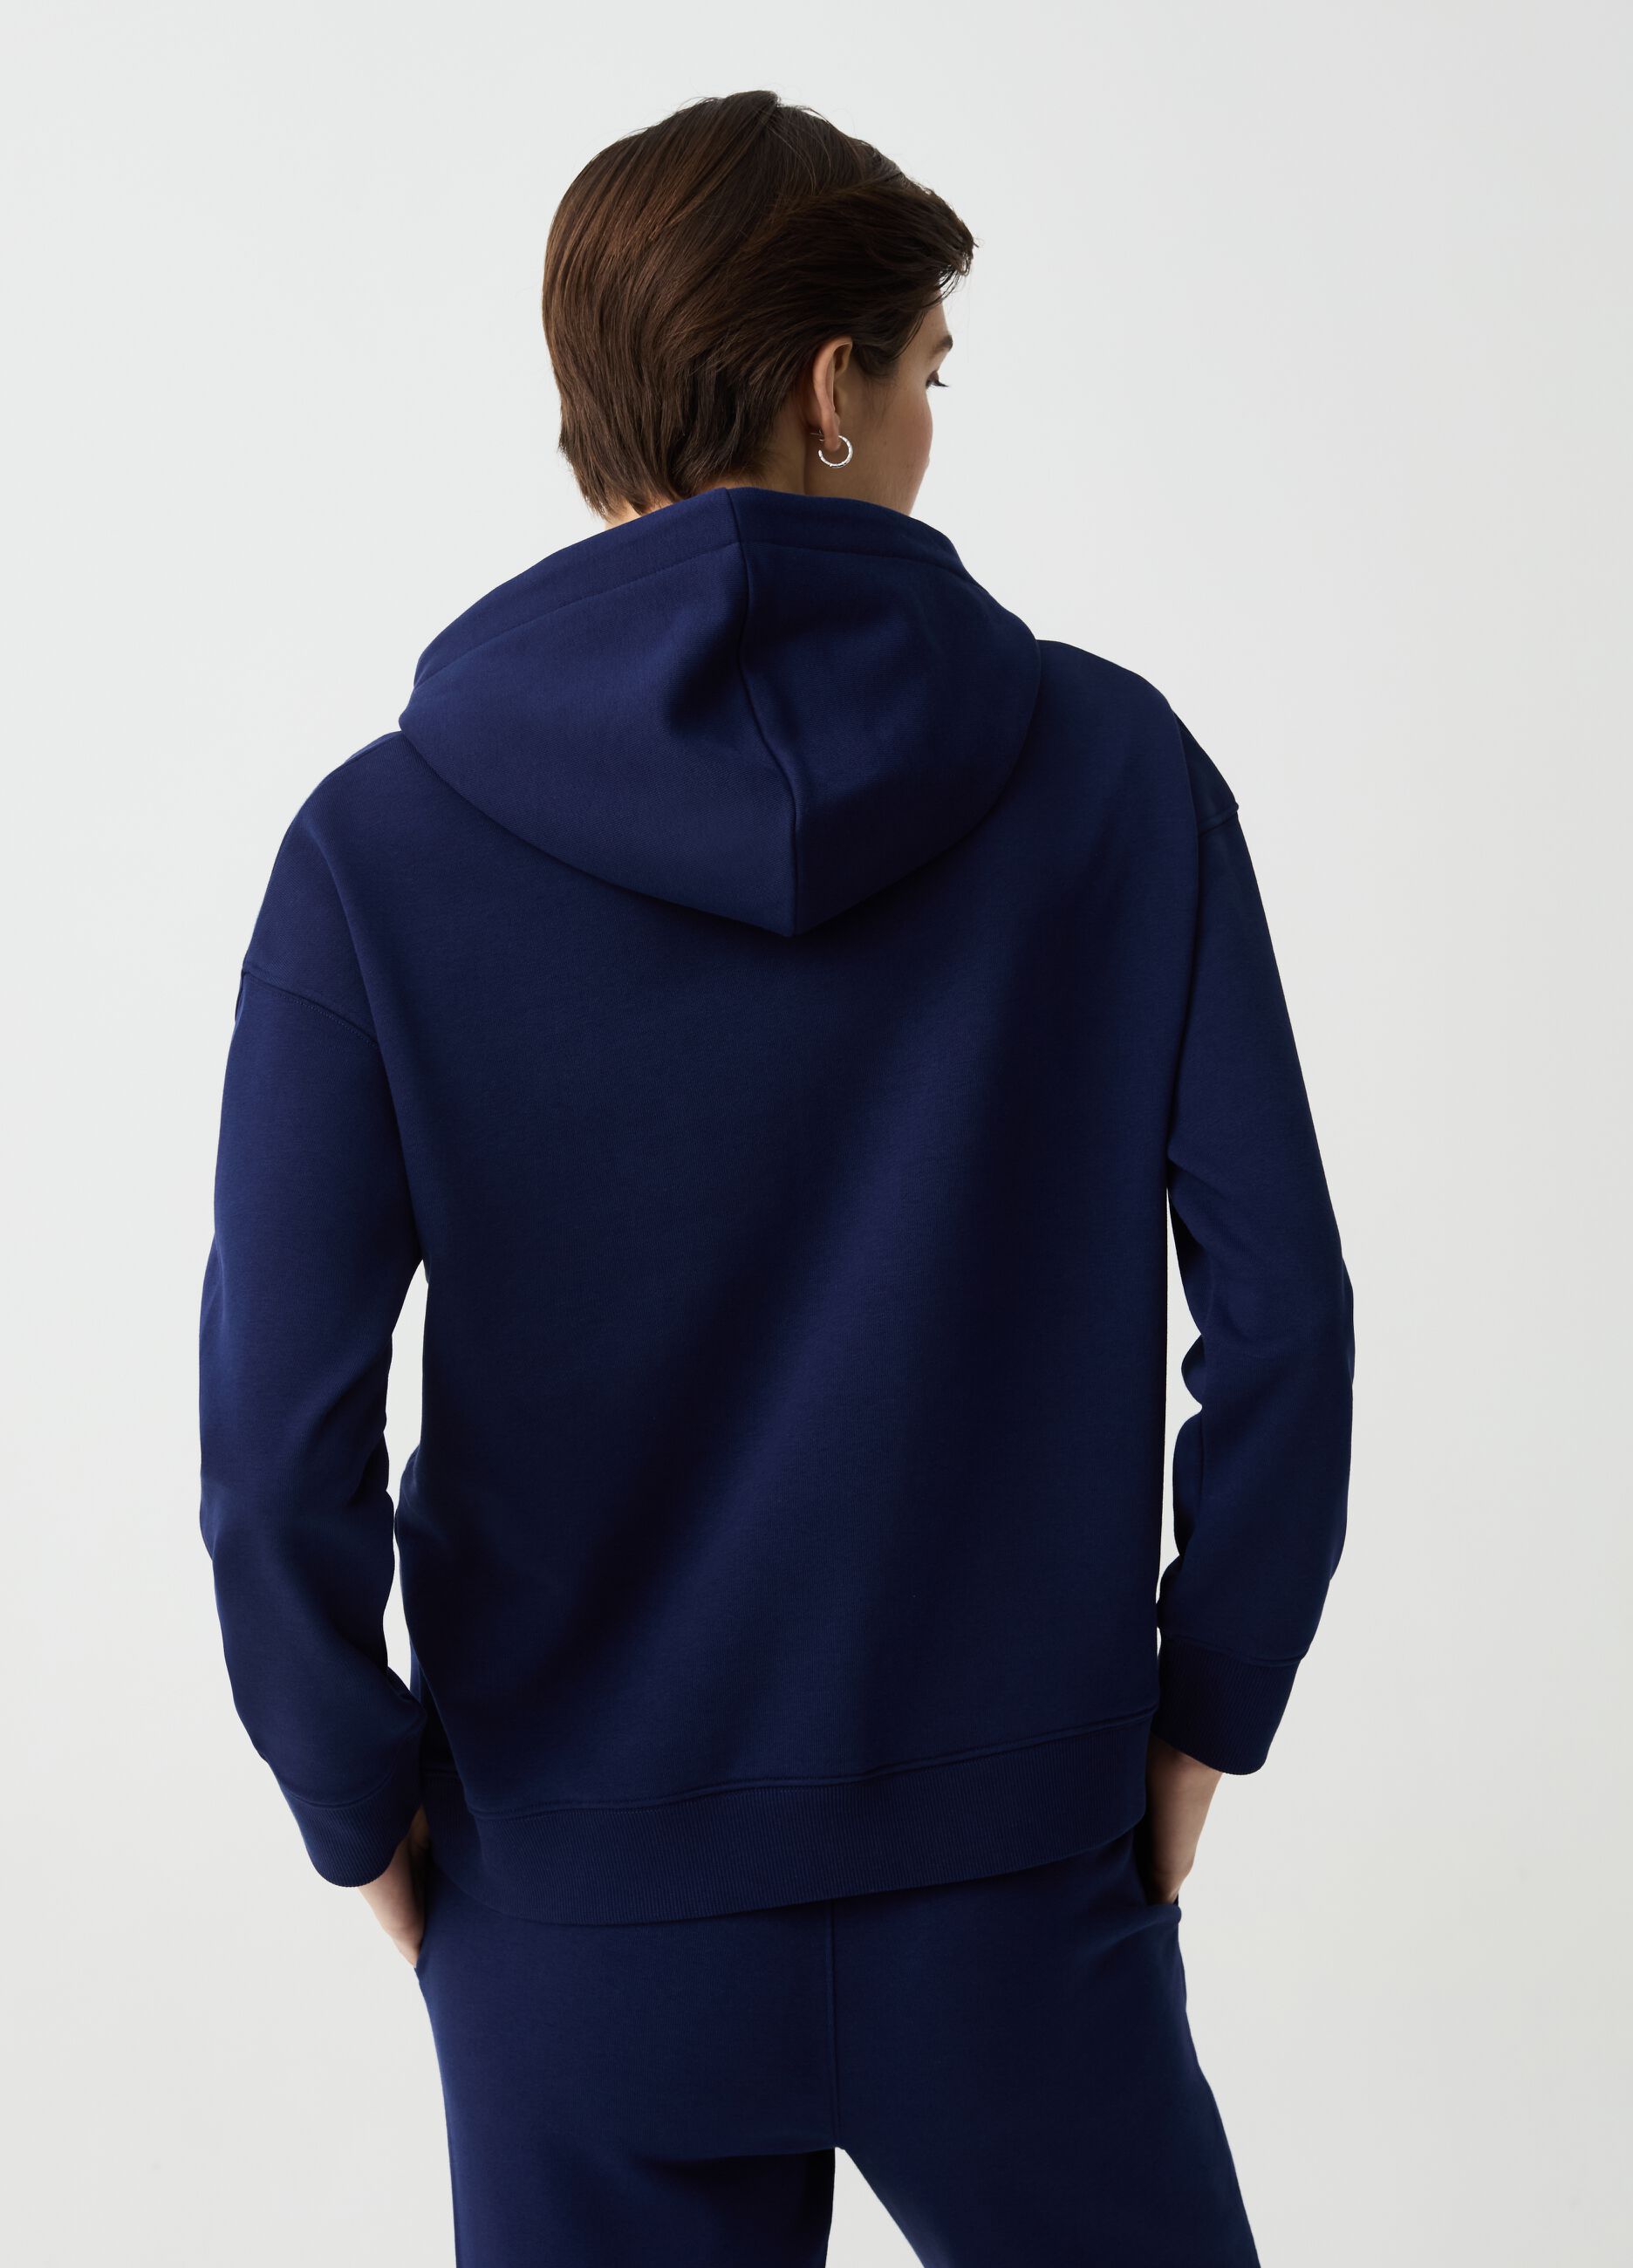 Essential sweatshirt with hood and print